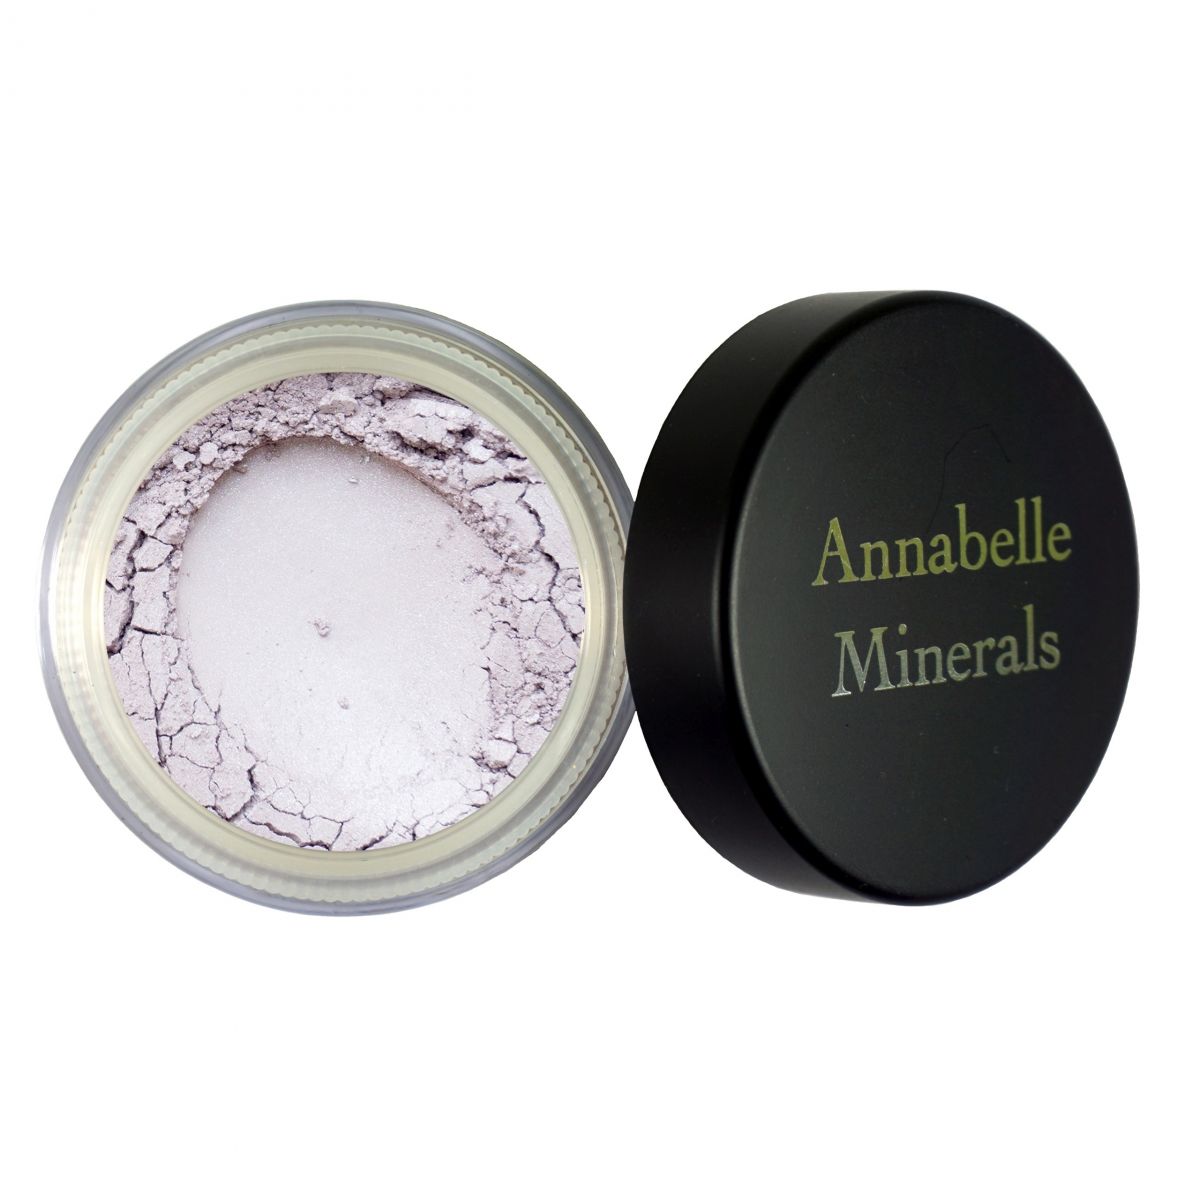 Annabelle Minerals Cień mineralny w odcieniu Cappuccino - 3g